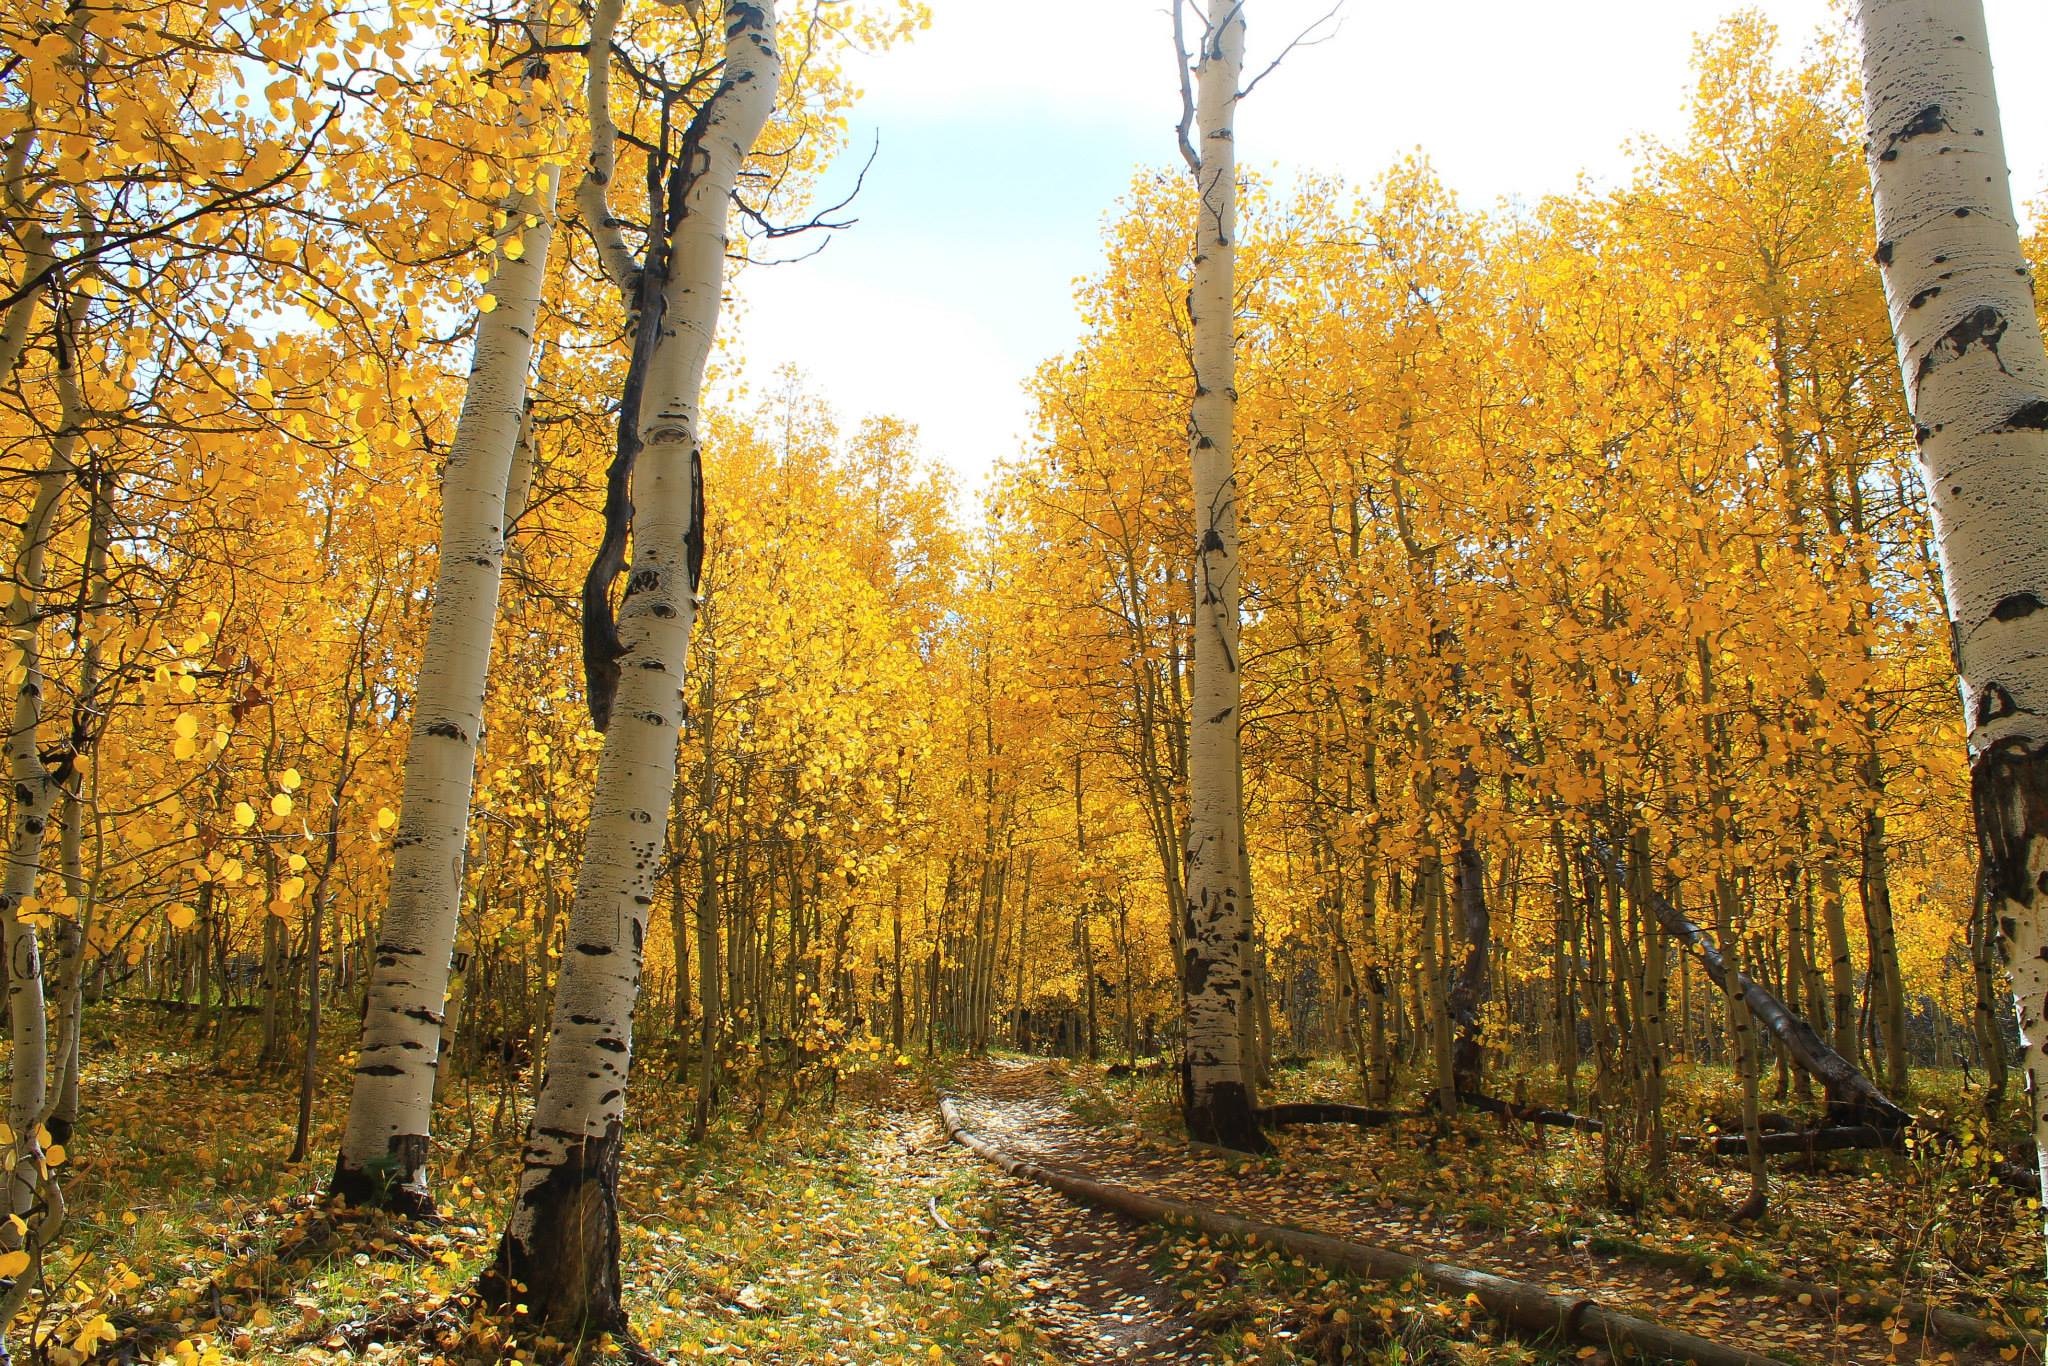 Finding Fall Color in Colorado 2019